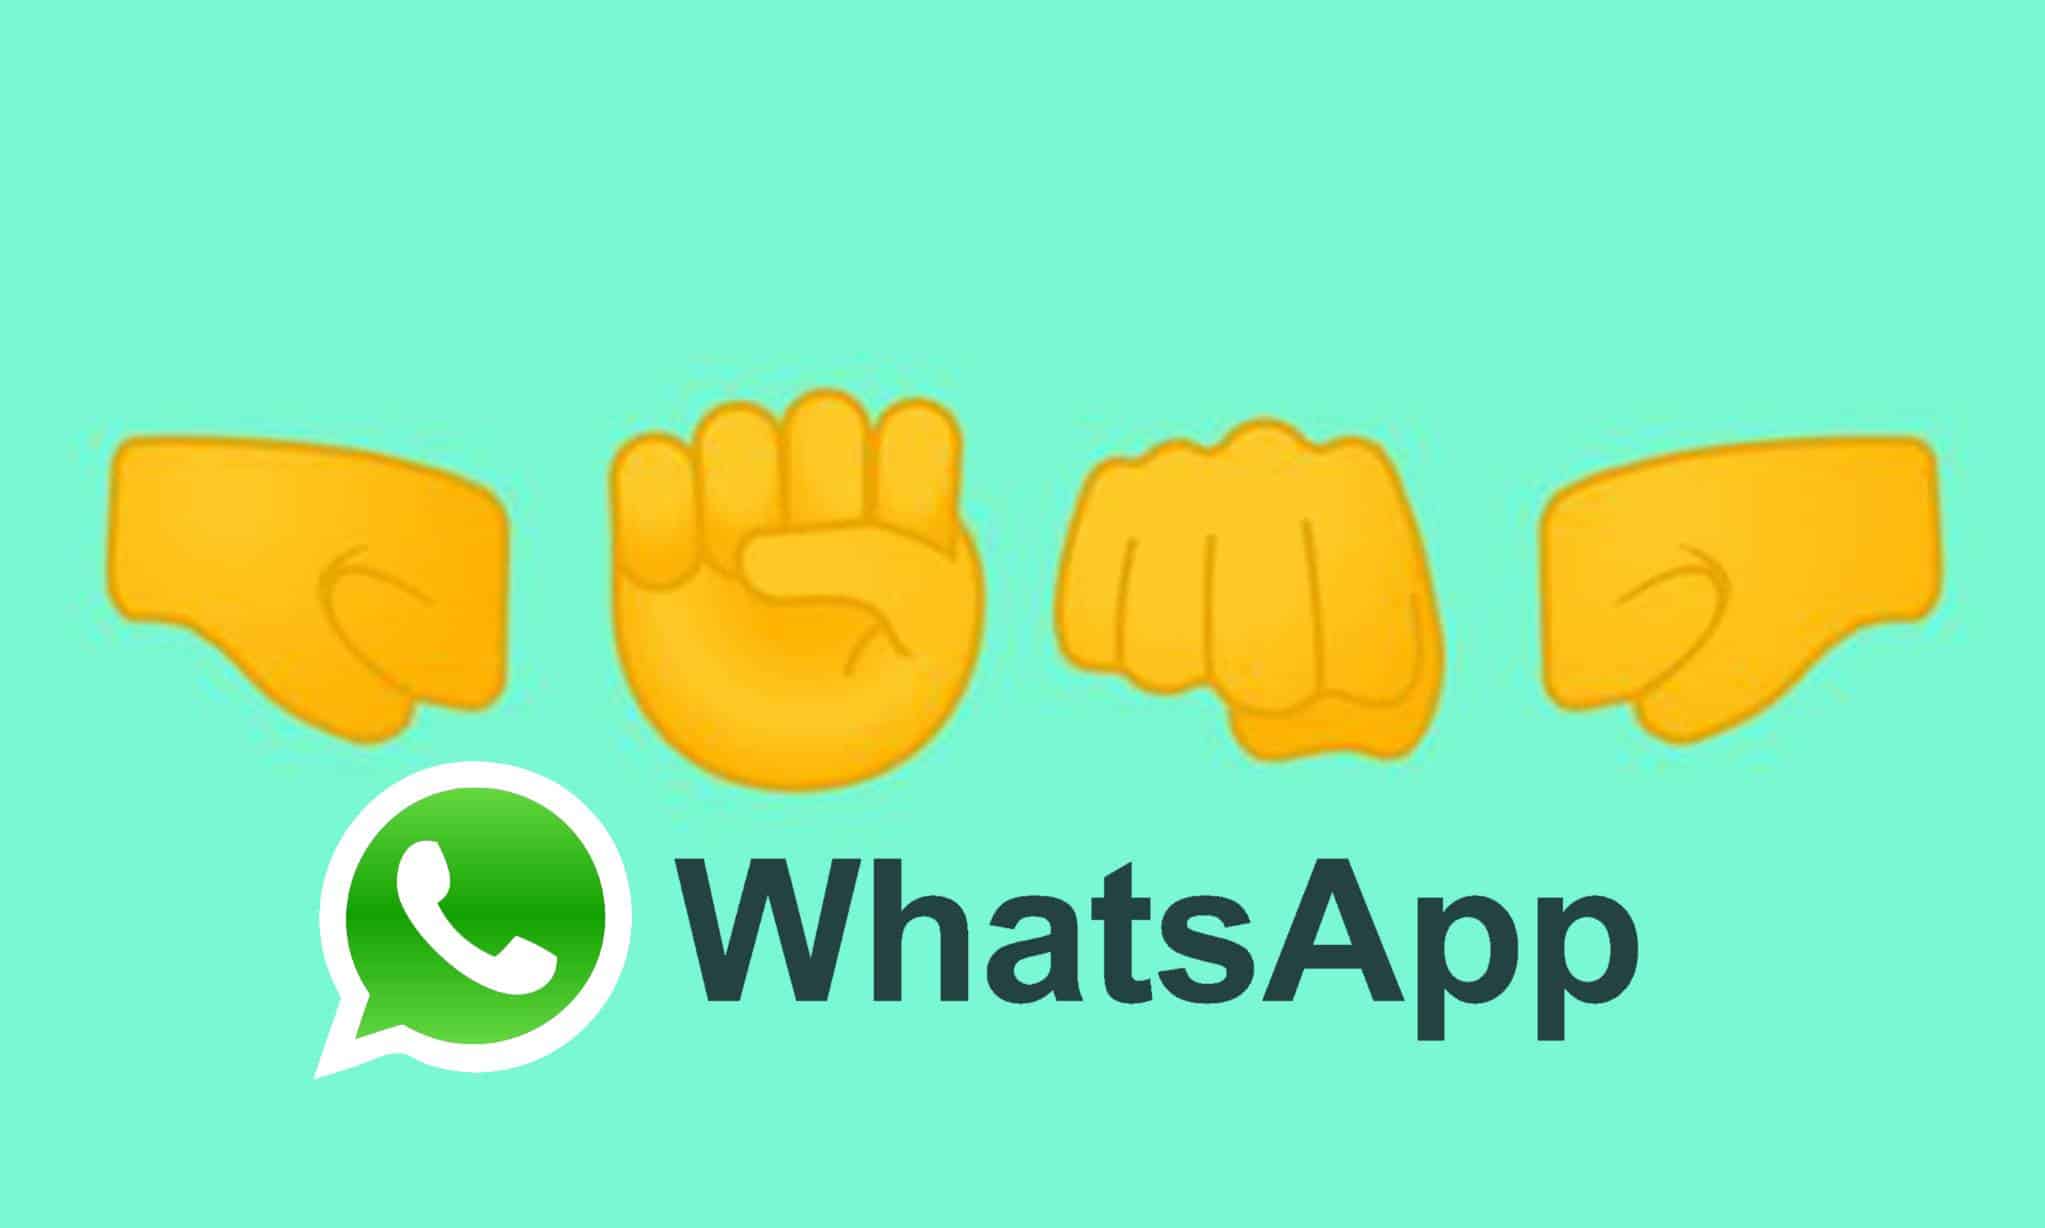 Surpreenda-se: Este é o verdadeiro significado dos emojis dos 4 punhos no WhatsApp